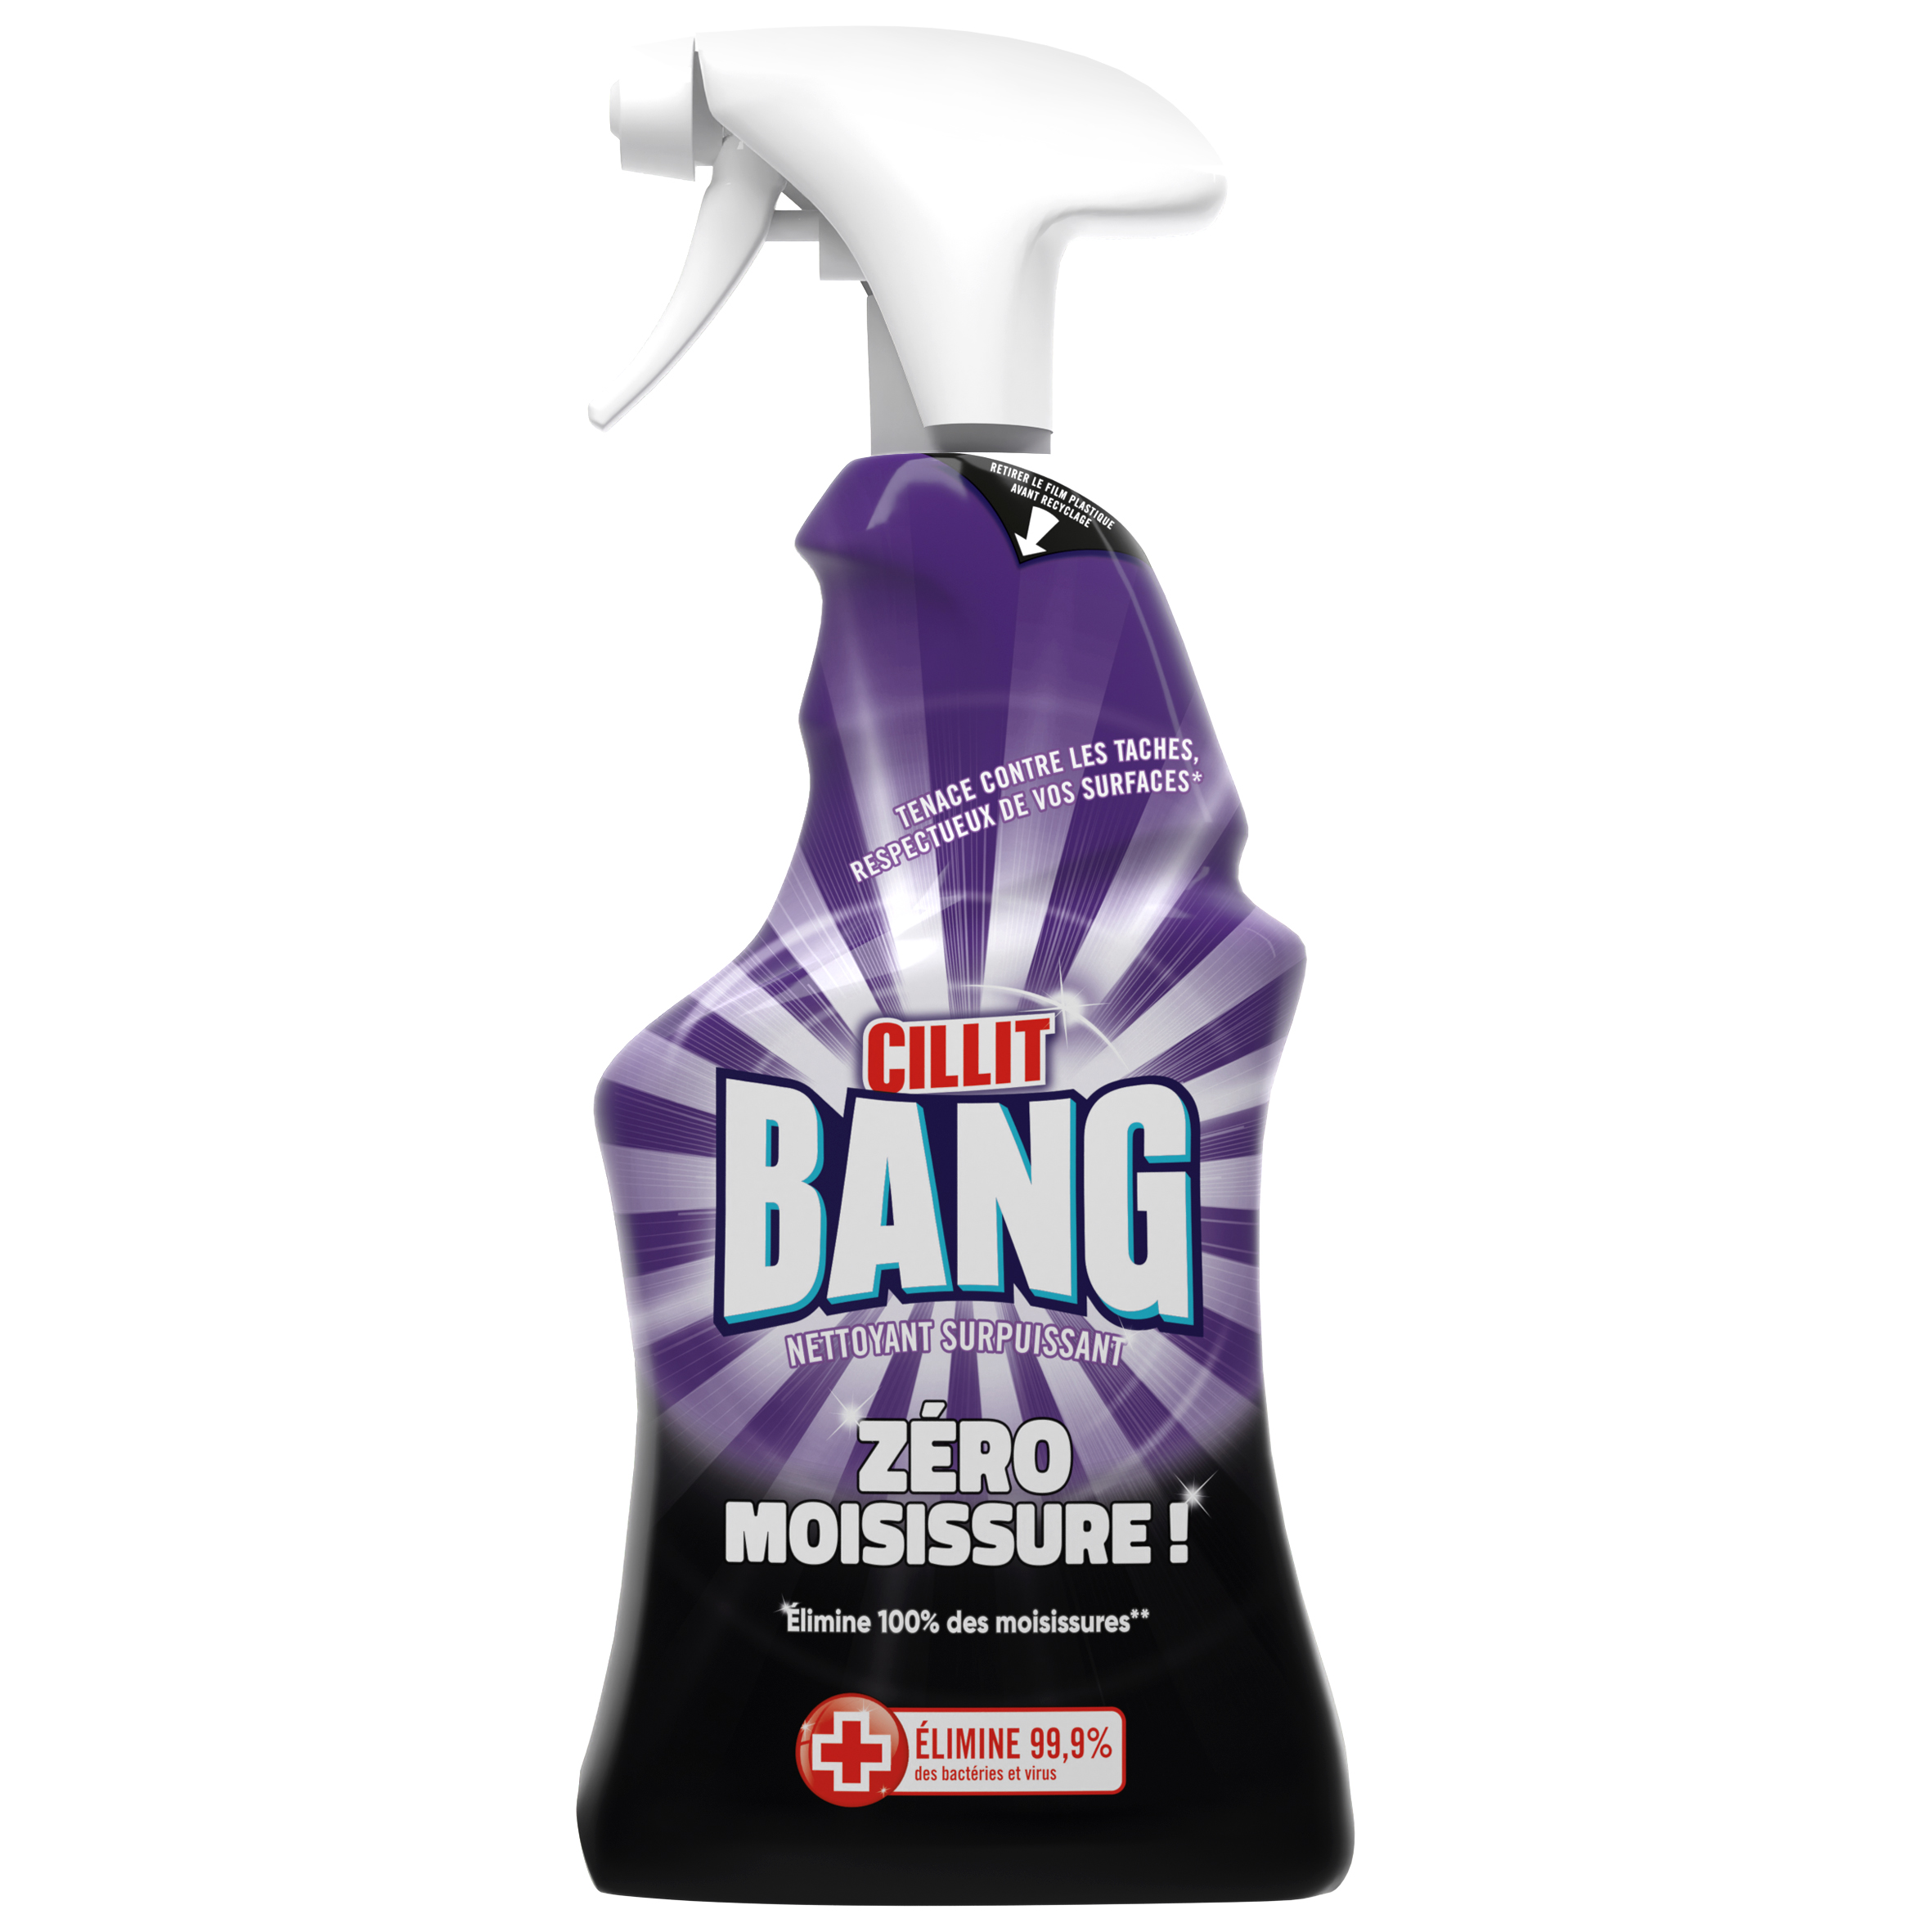 Promo Cillit bang nettoyant spray zéro moisissure ! * chez Géant Casino